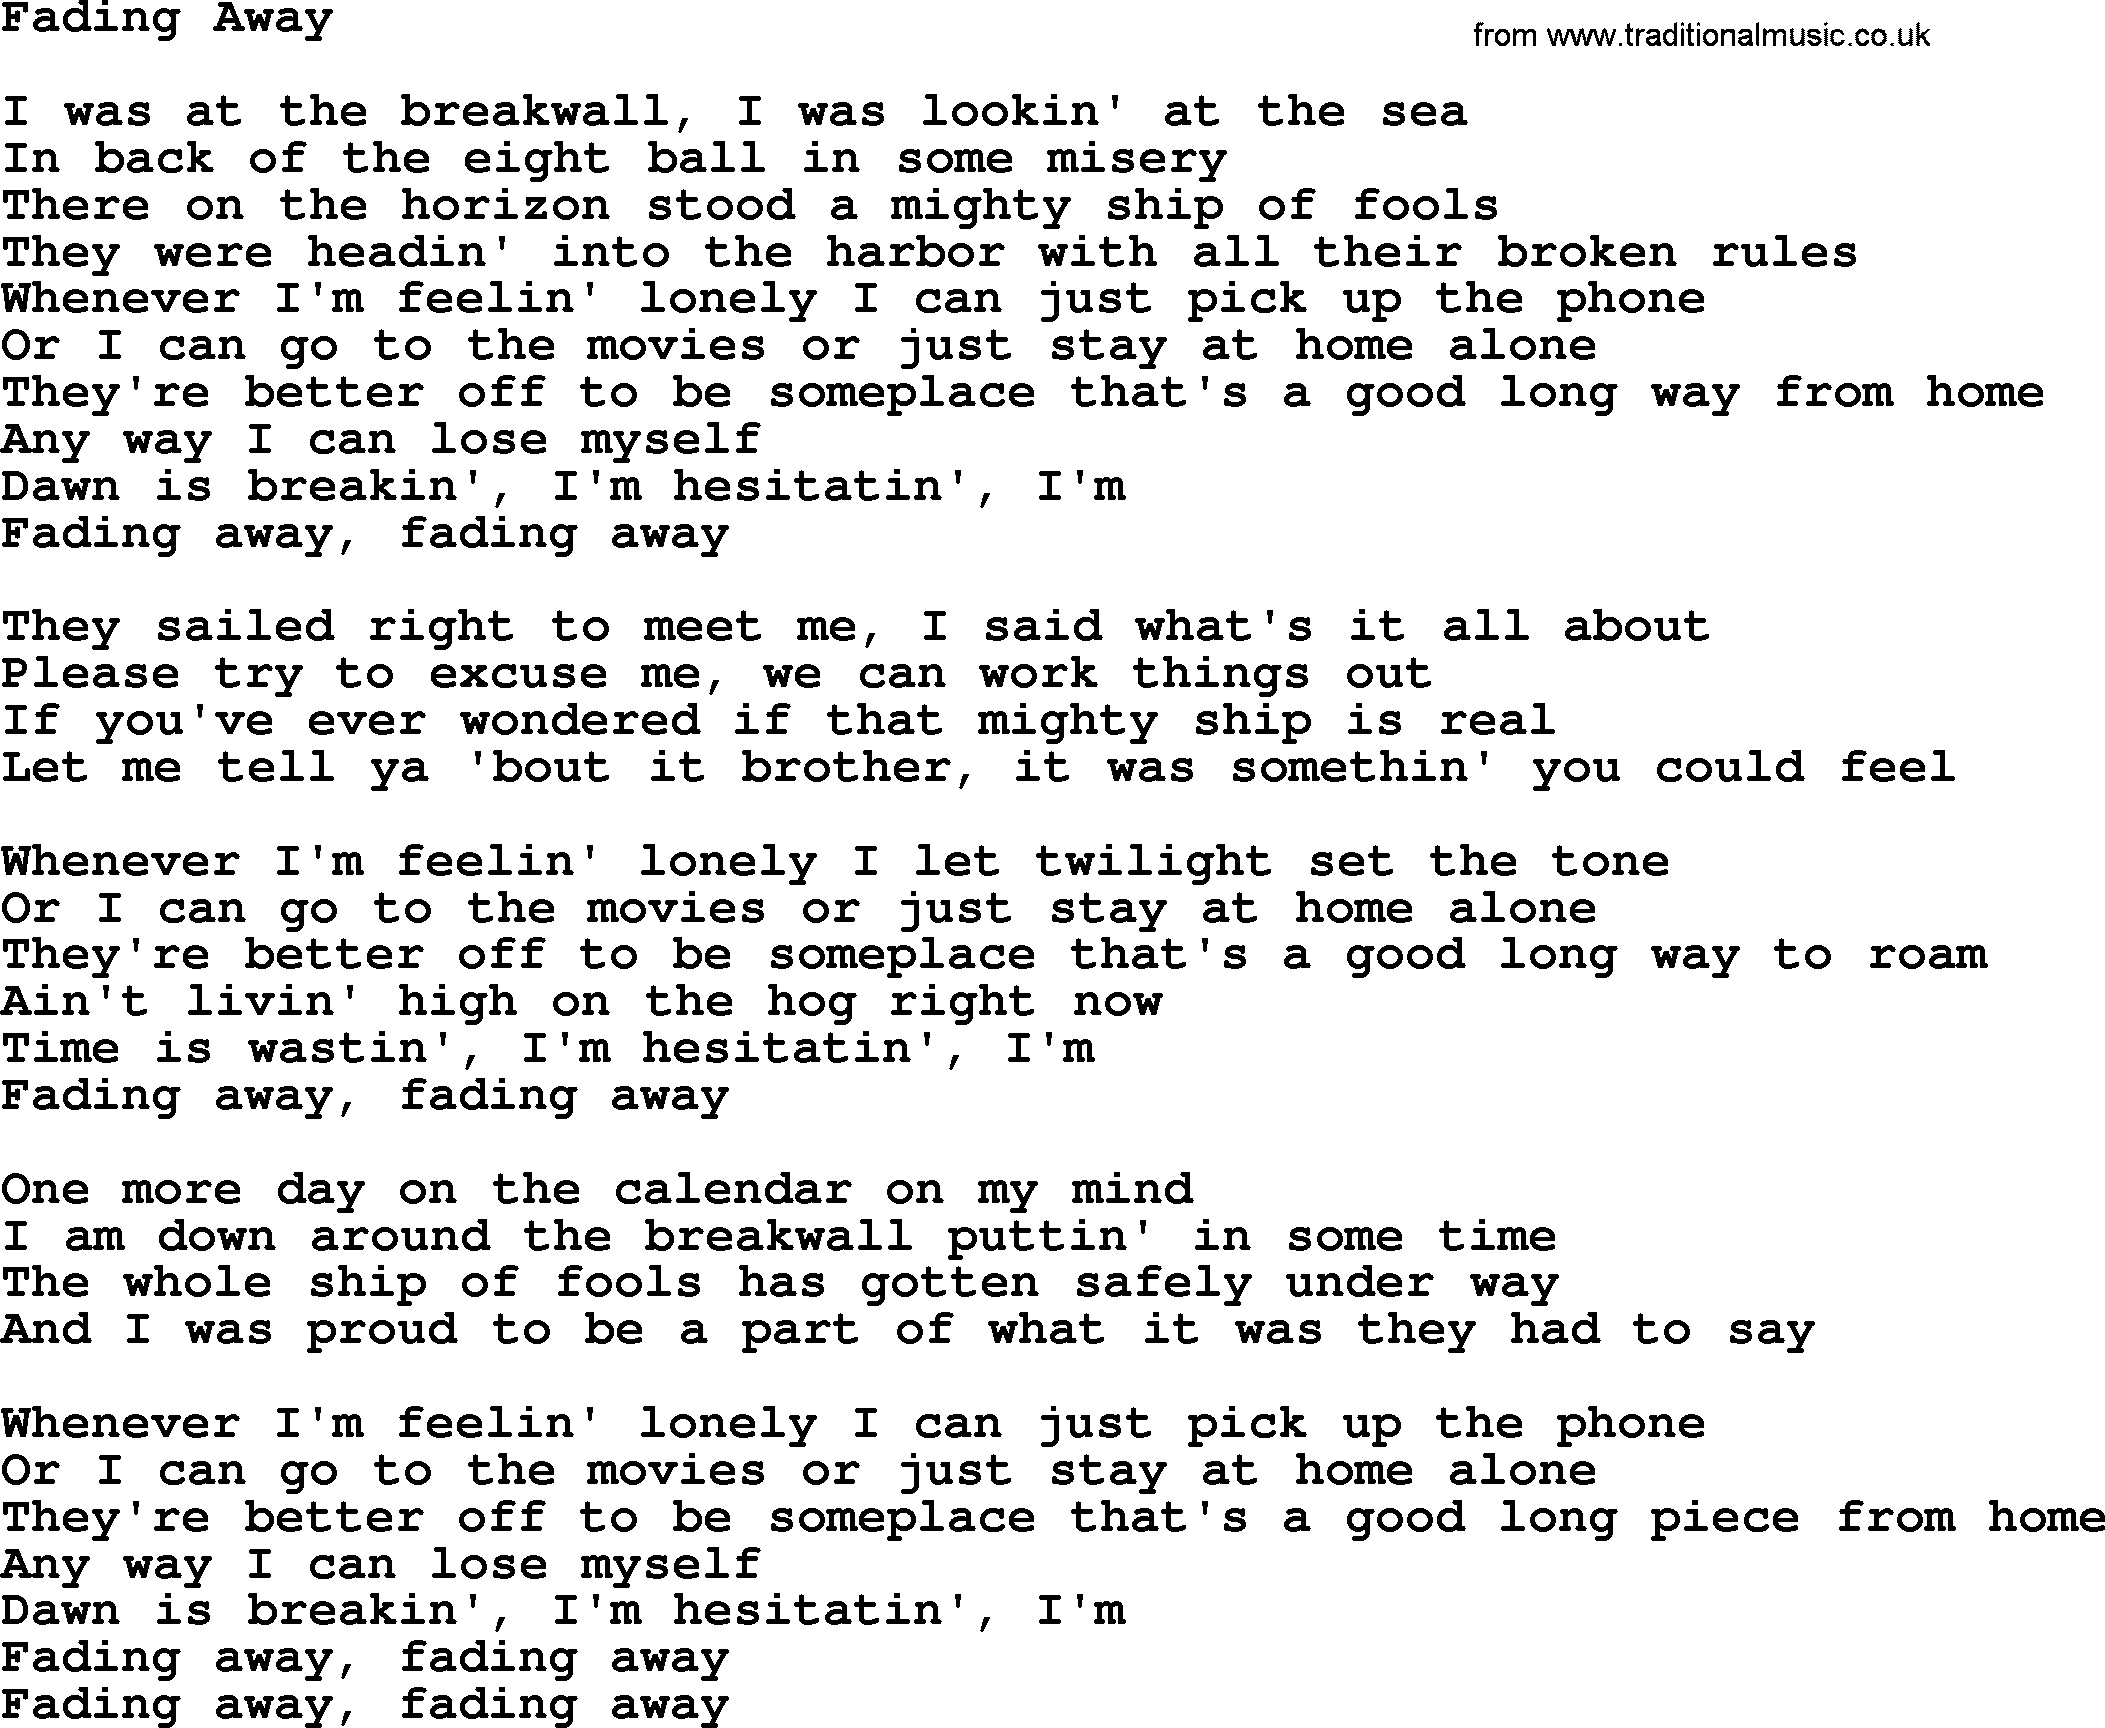 Gordon Lightfoot song Fading Away, lyrics